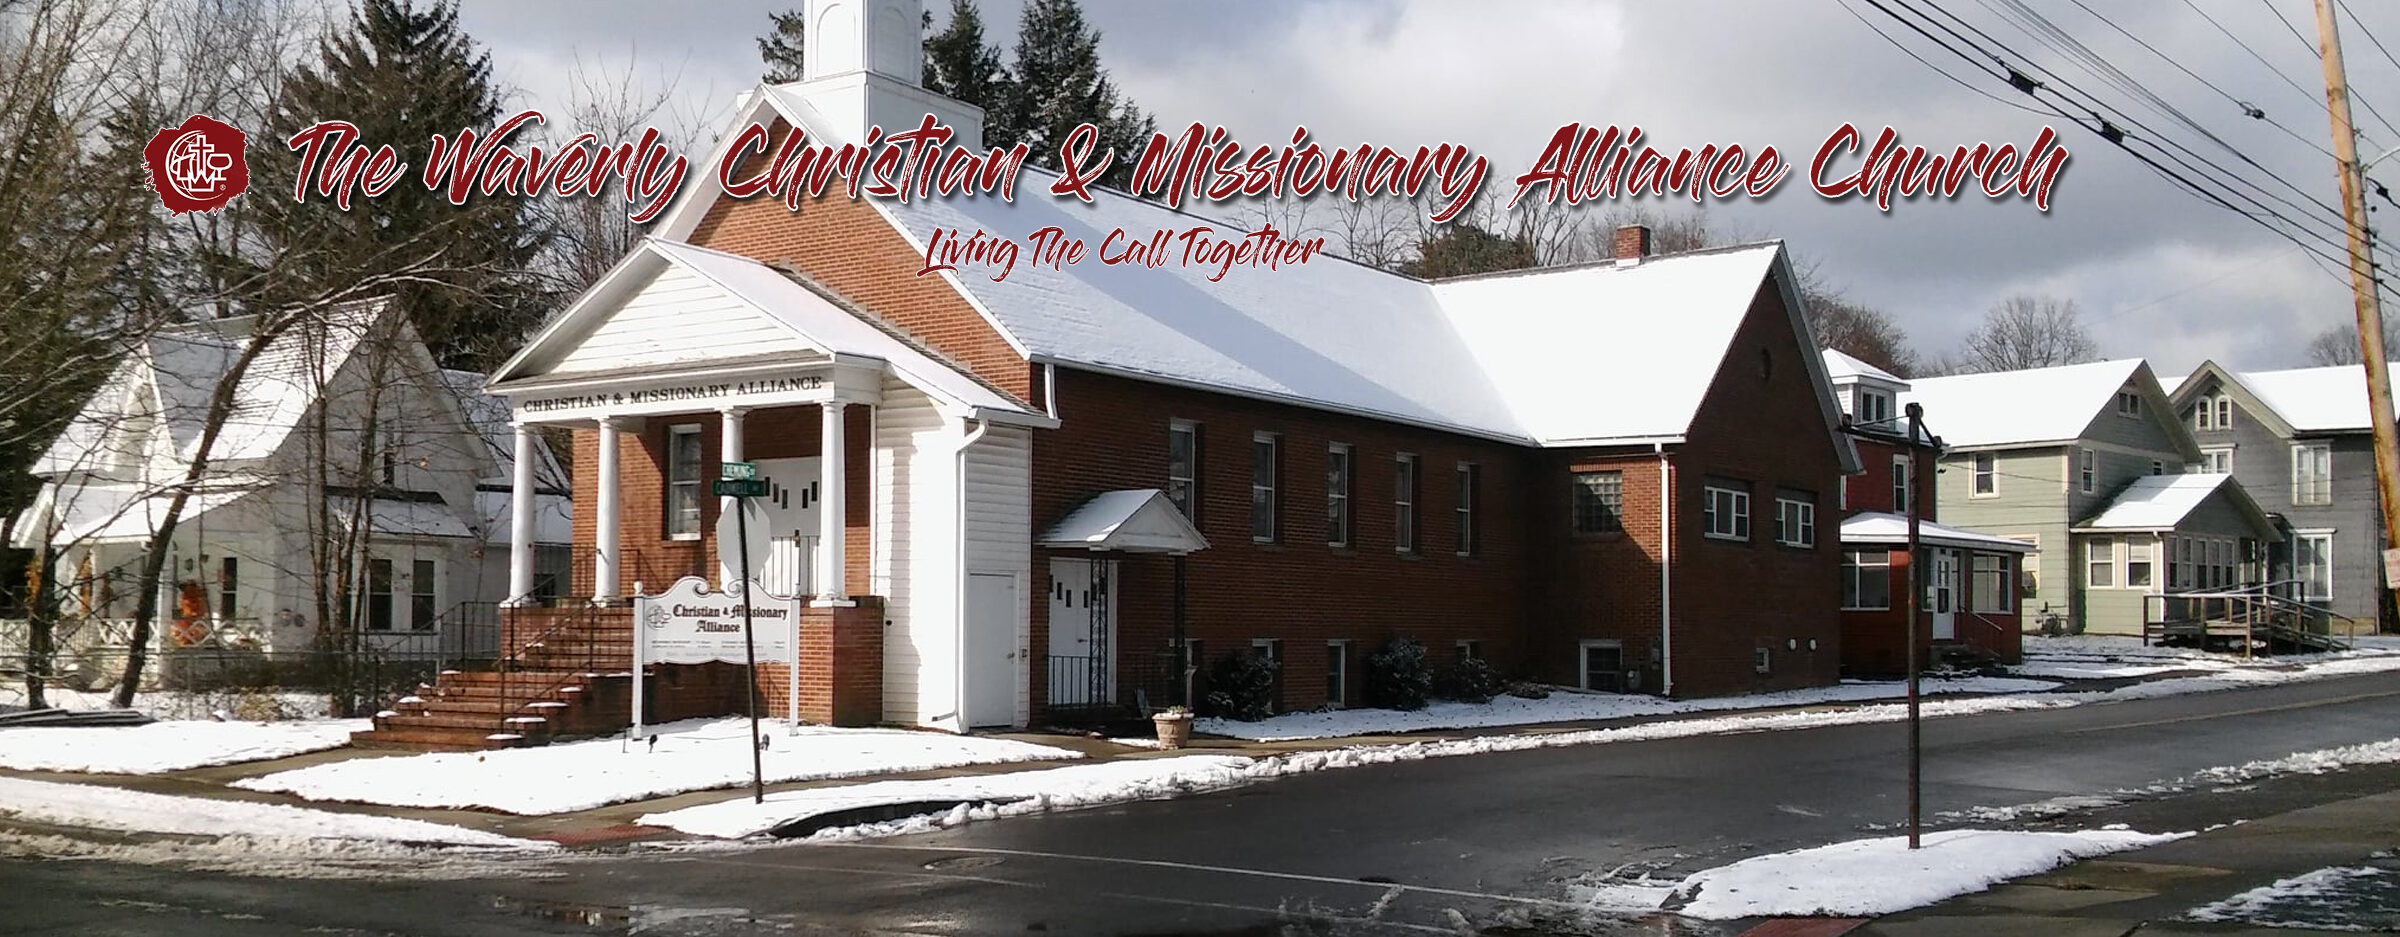 Waverly Christian & Missionary Alliance Church